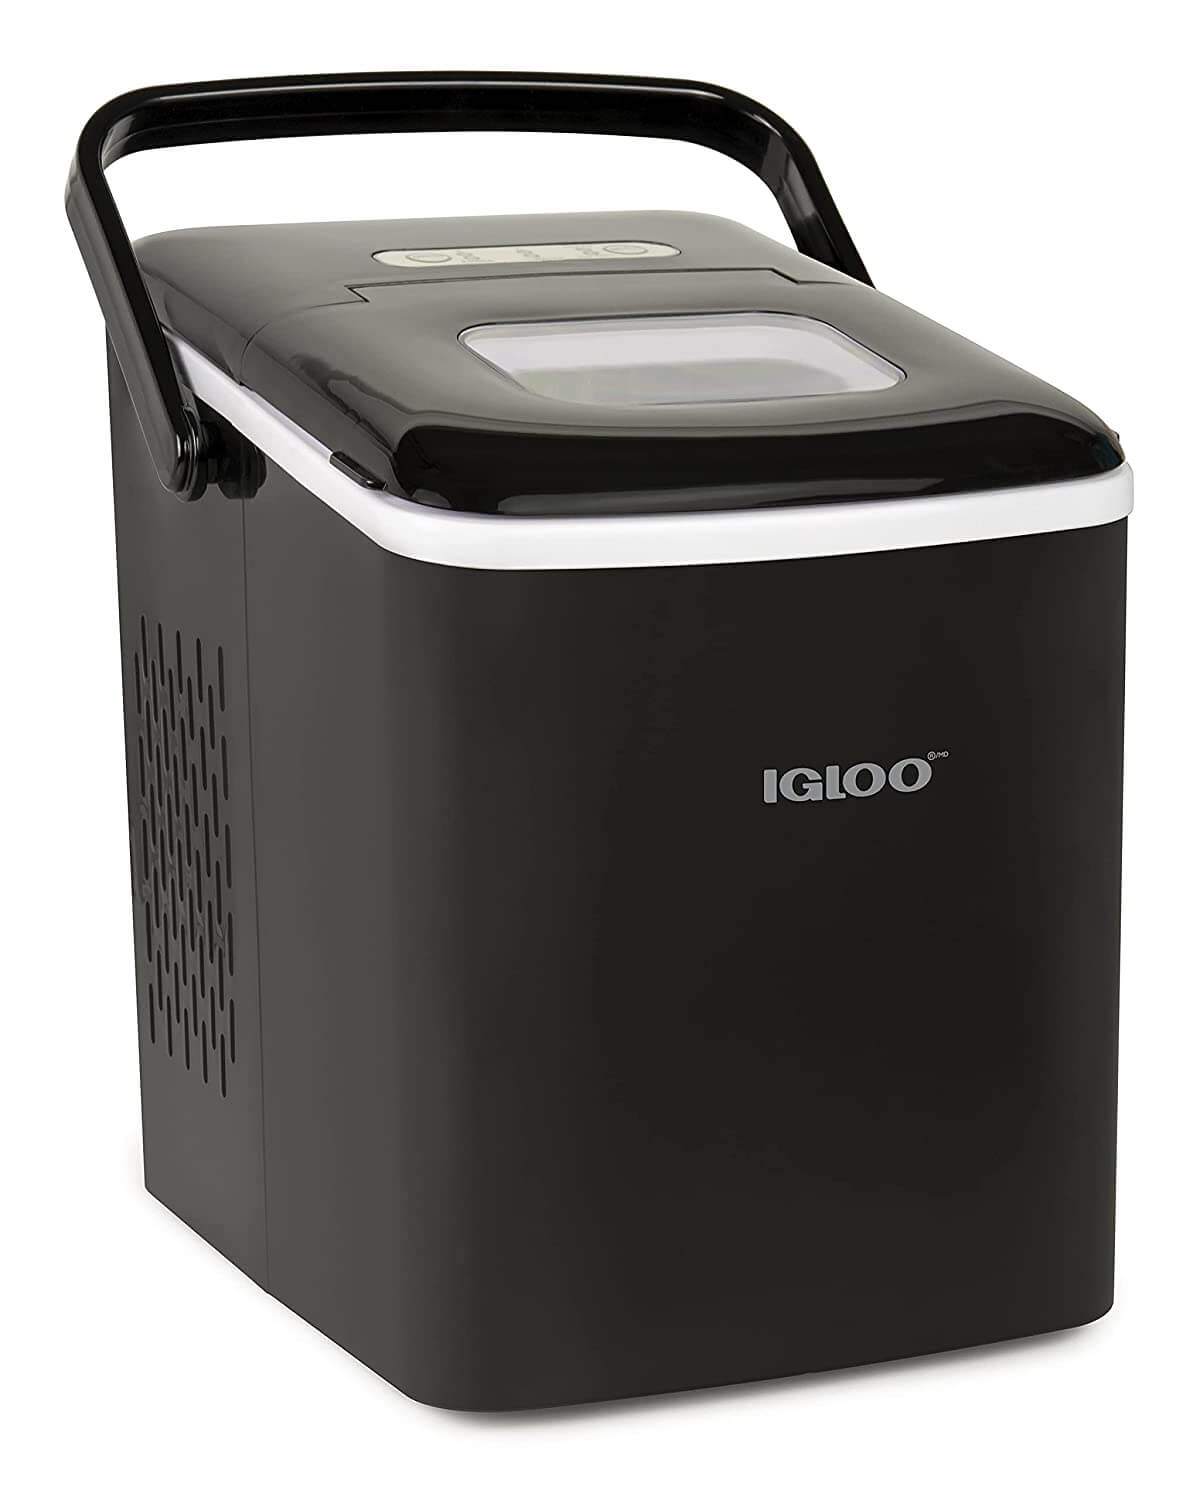 Igloo Premium Self-Cleaning Countertop Ice Maker